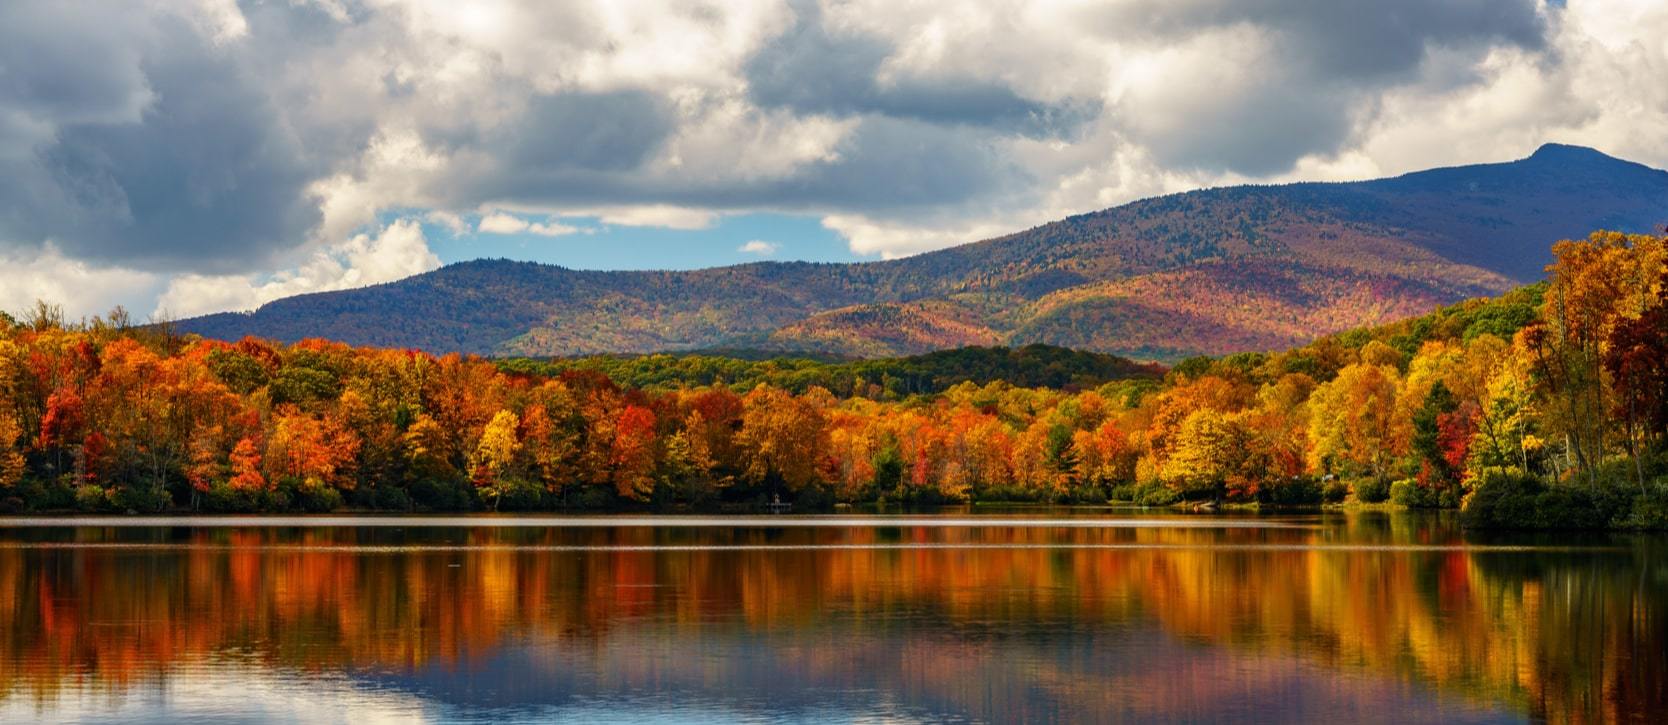 Reflection in the lake of Fall Blue Ridge Mountains, Appalachian Mountains, North Carolina